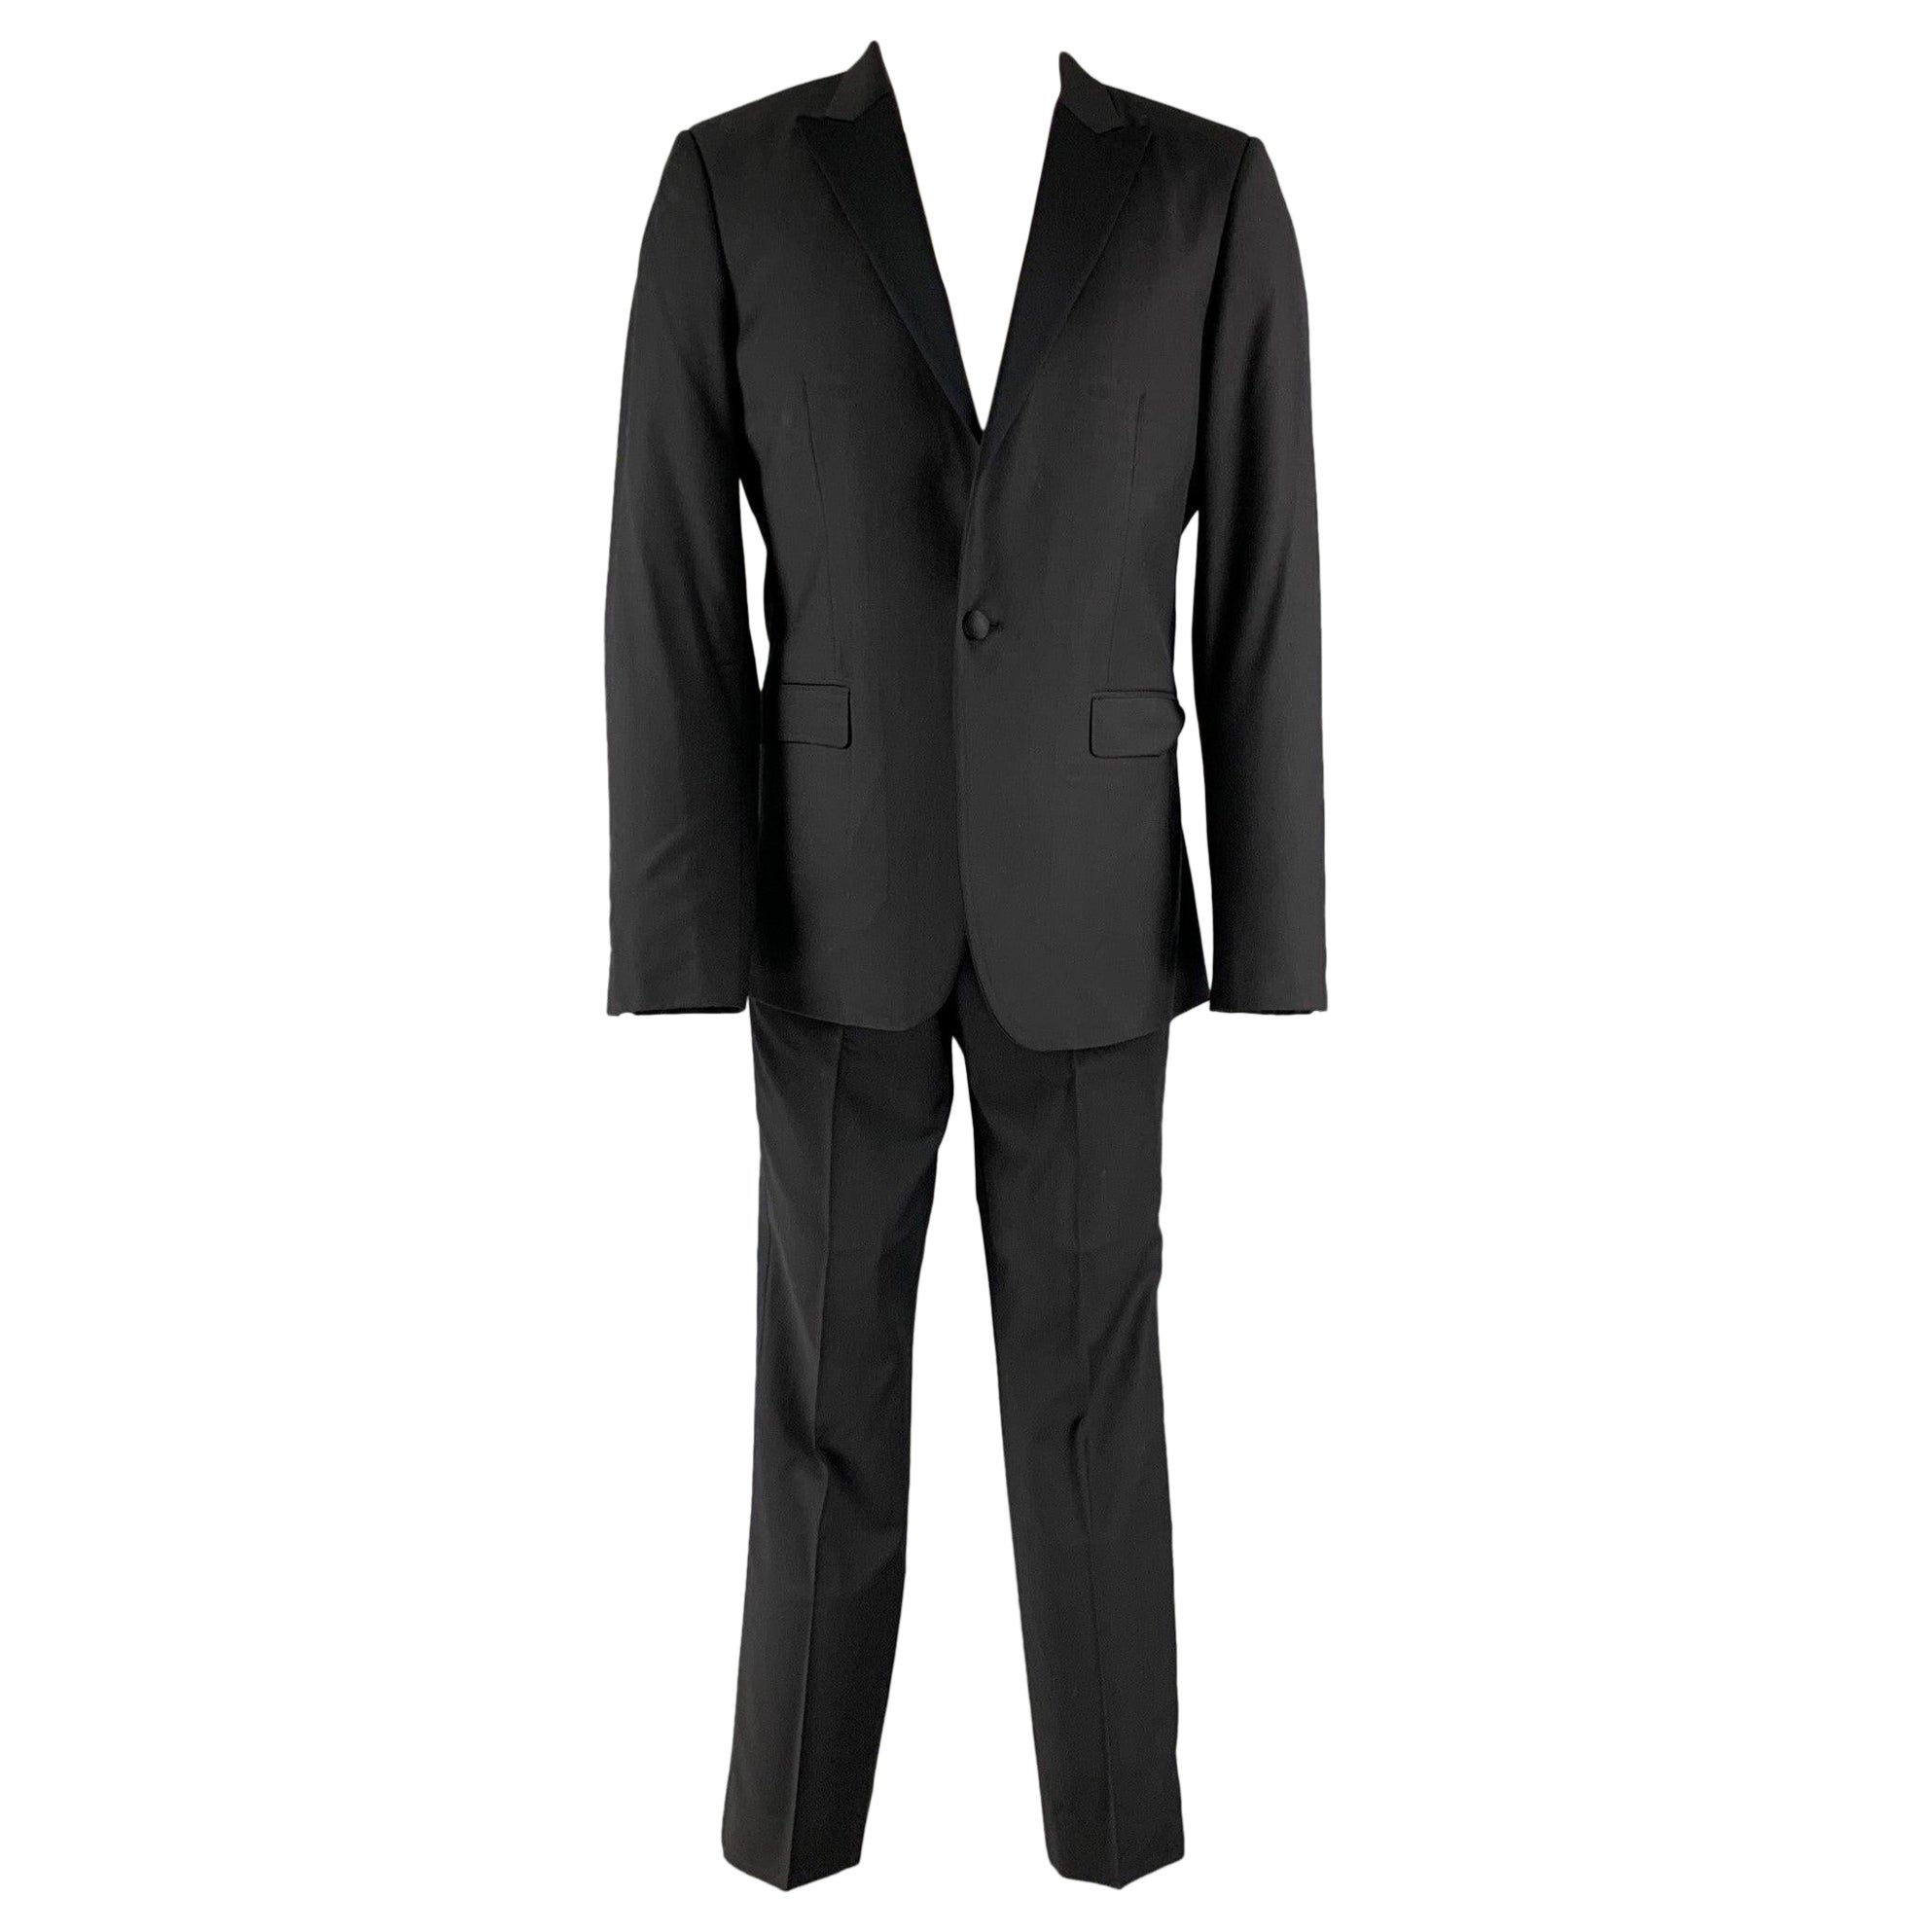 CALVIN KLEIN COLLECTION Size 38 Black Solid Wool Peak Lapel Tuxedo For Sale